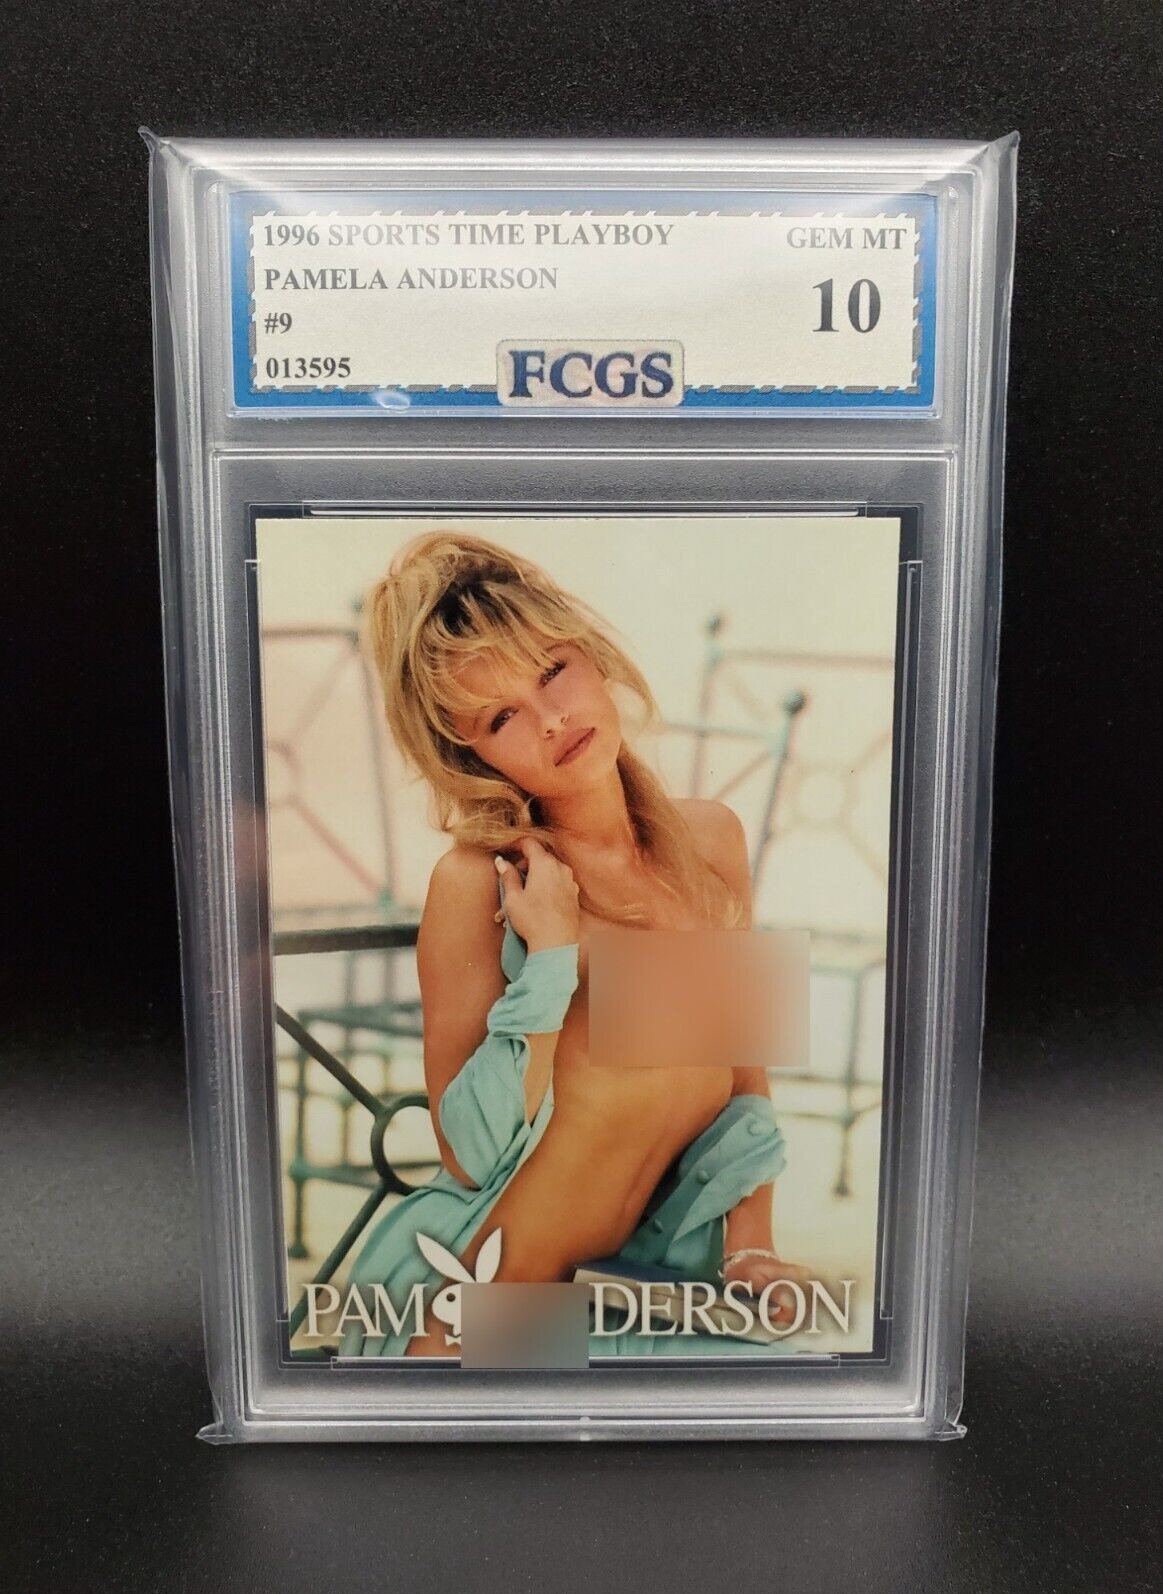 1996 Sports Time Playboy Pamela Anderson #9 - Graded 10 [FCGS] GEM-MT